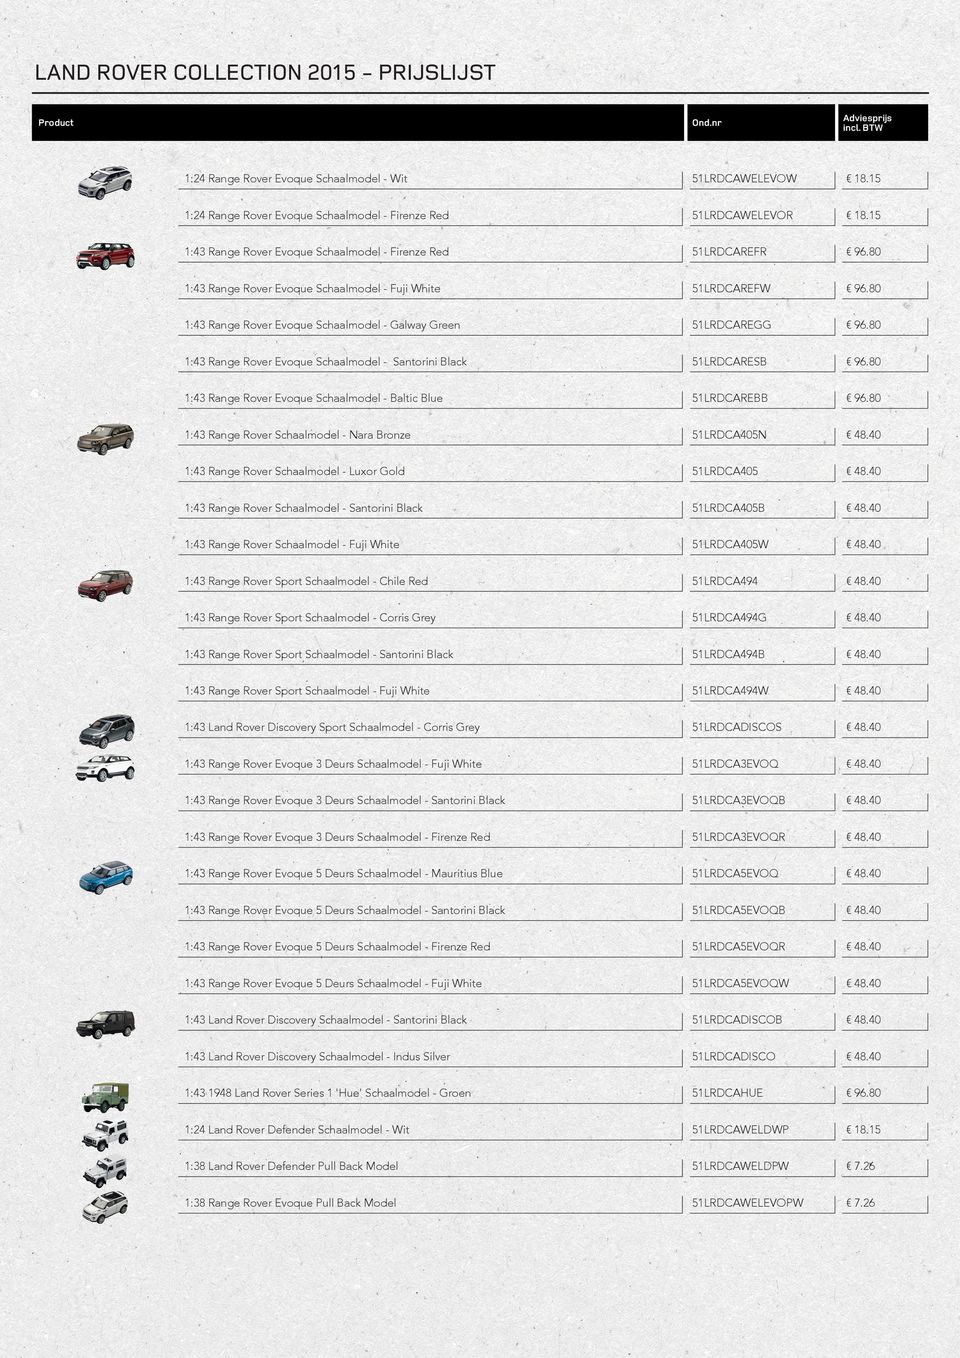 Evoque Schaalmodel - Baltic Blue 51LRDCAREBB 1:43 Range Rover Schaalmodel - Nara Bronze 51LRDCA405N 1:43 Range Rover Schaalmodel - Luxor Gold 51LRDCA405 1:43 Range Rover Schaalmodel - Santorini Black